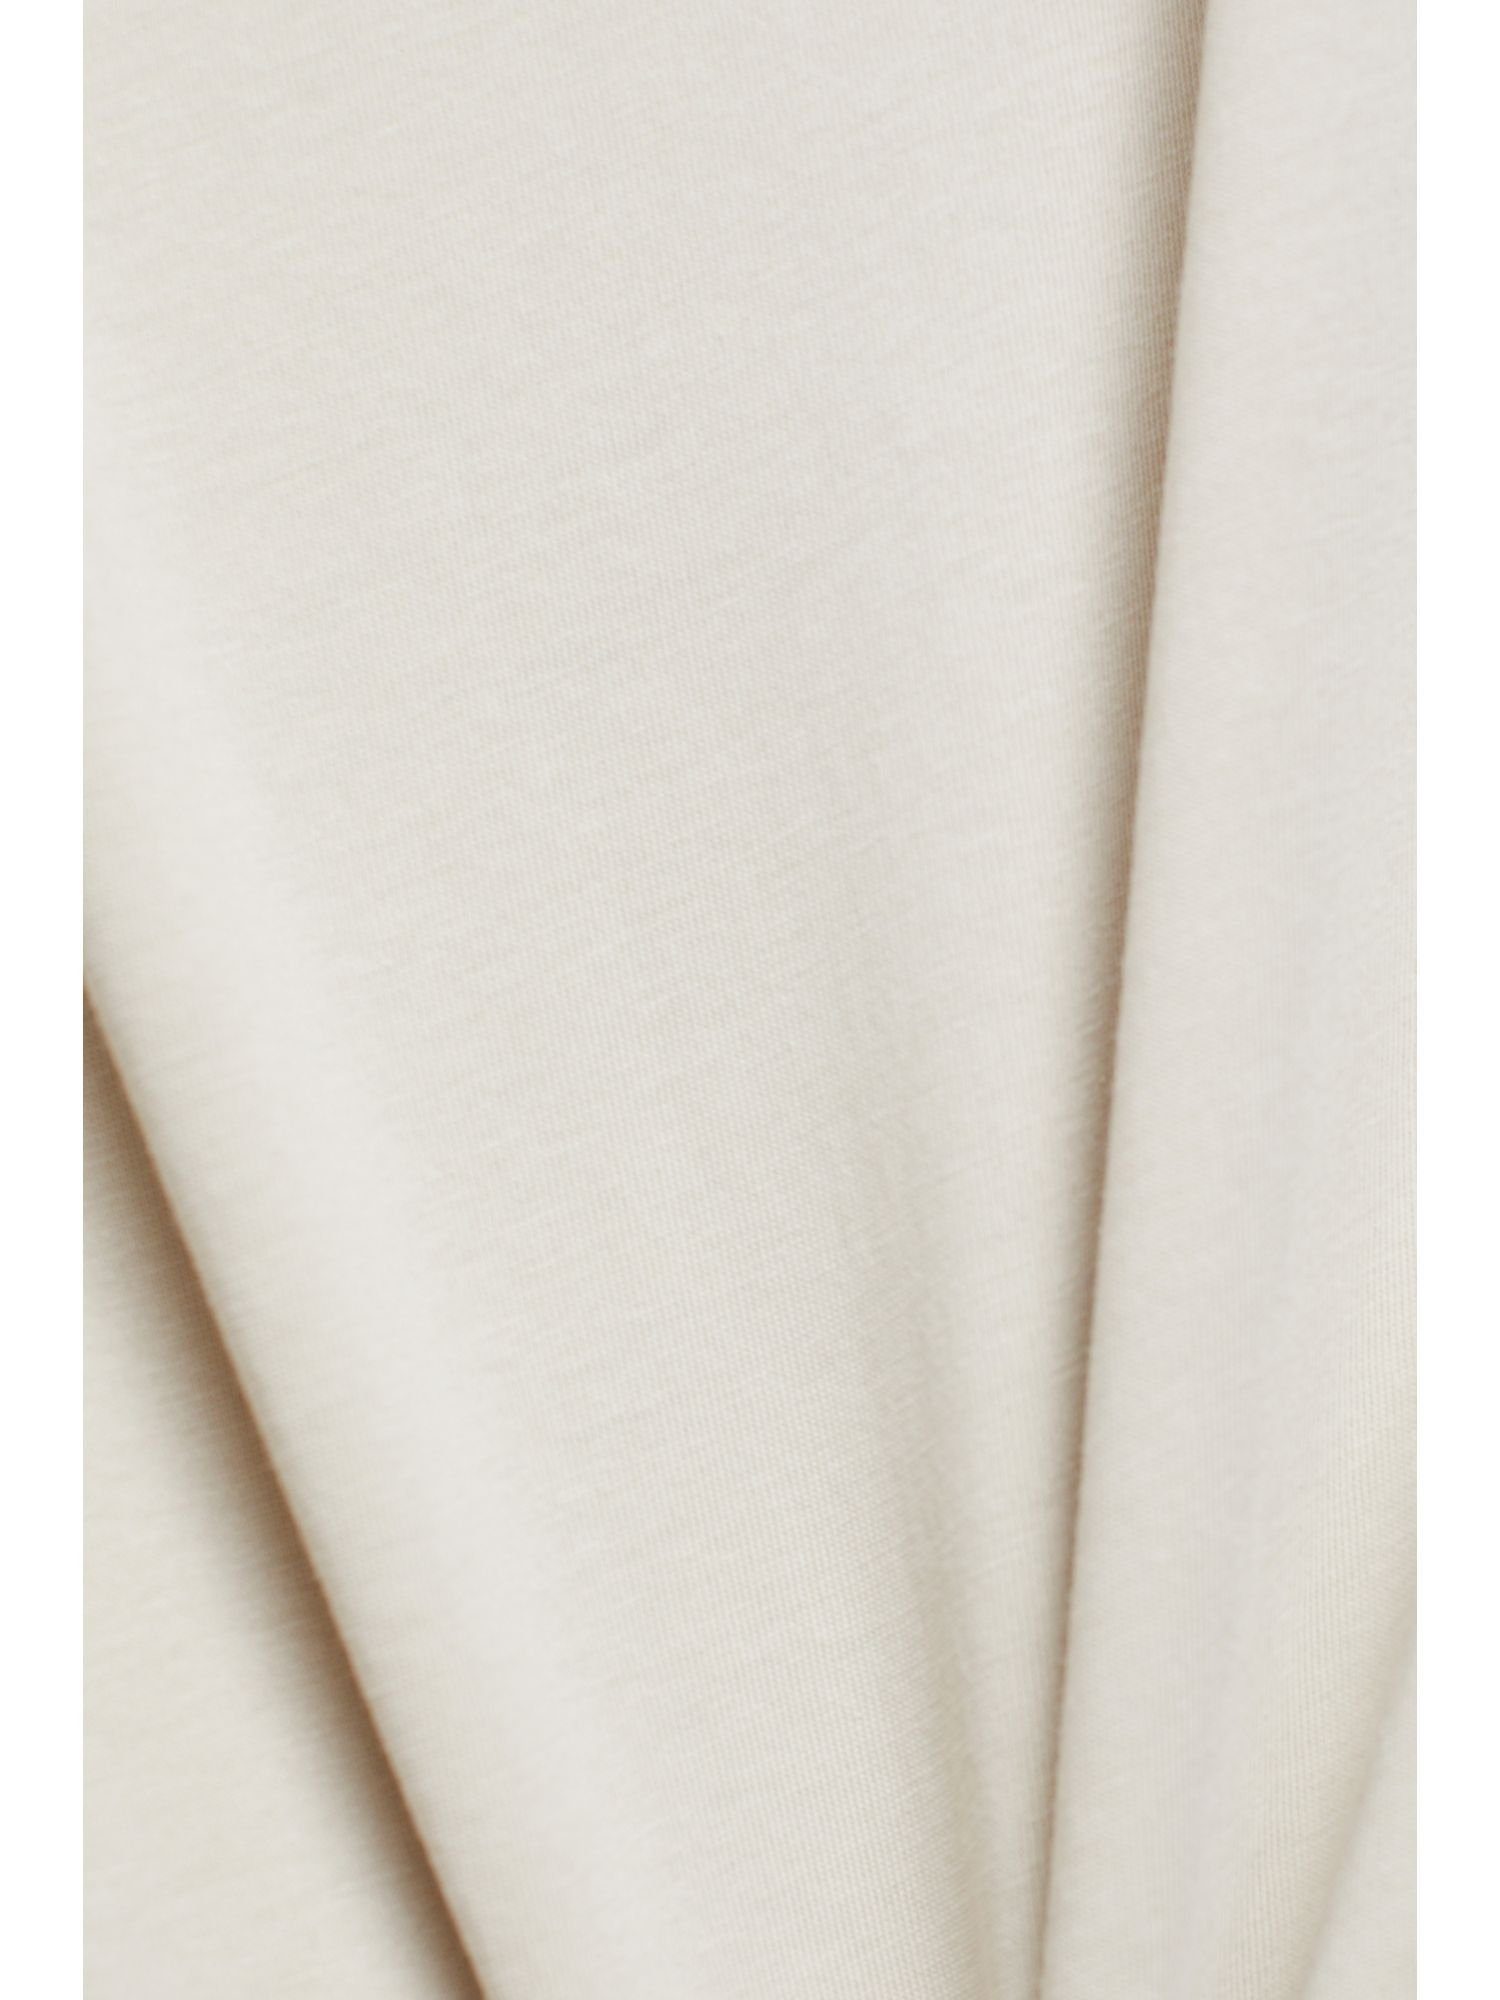 (1-tlg) Baumwoll-T-Shirt mit Rundhalsausschnitt T-Shirt Esprit LIGHT TAUPE